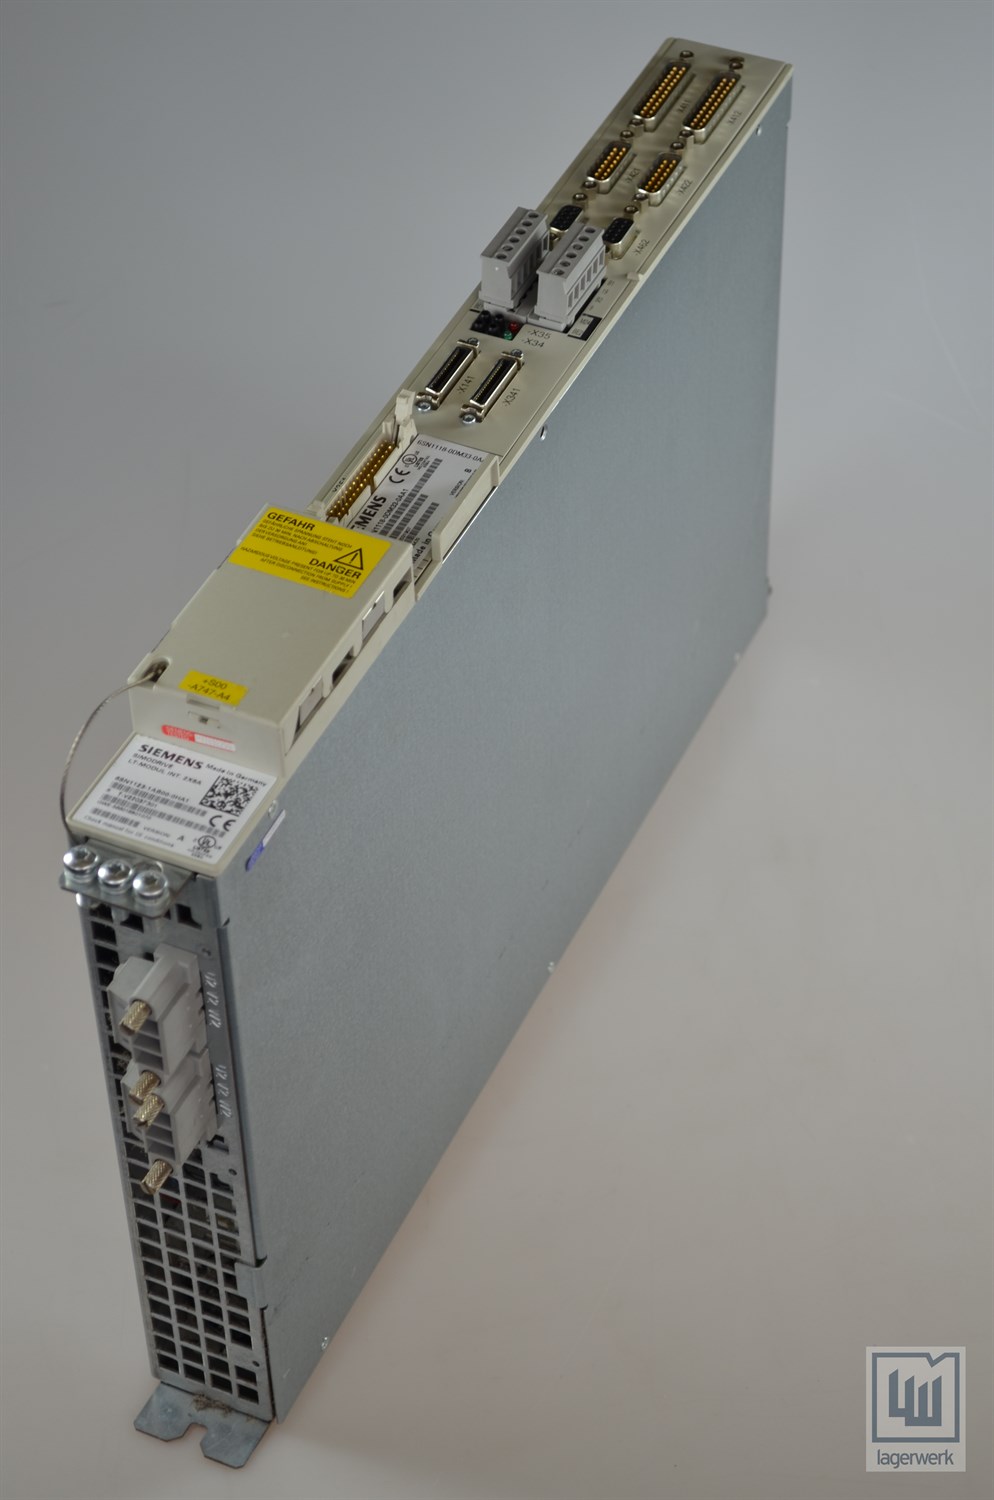 Siemens Simodrive LT-Modul 2x8A Typ 6SN1123-1AB00-0HA2 in OVP